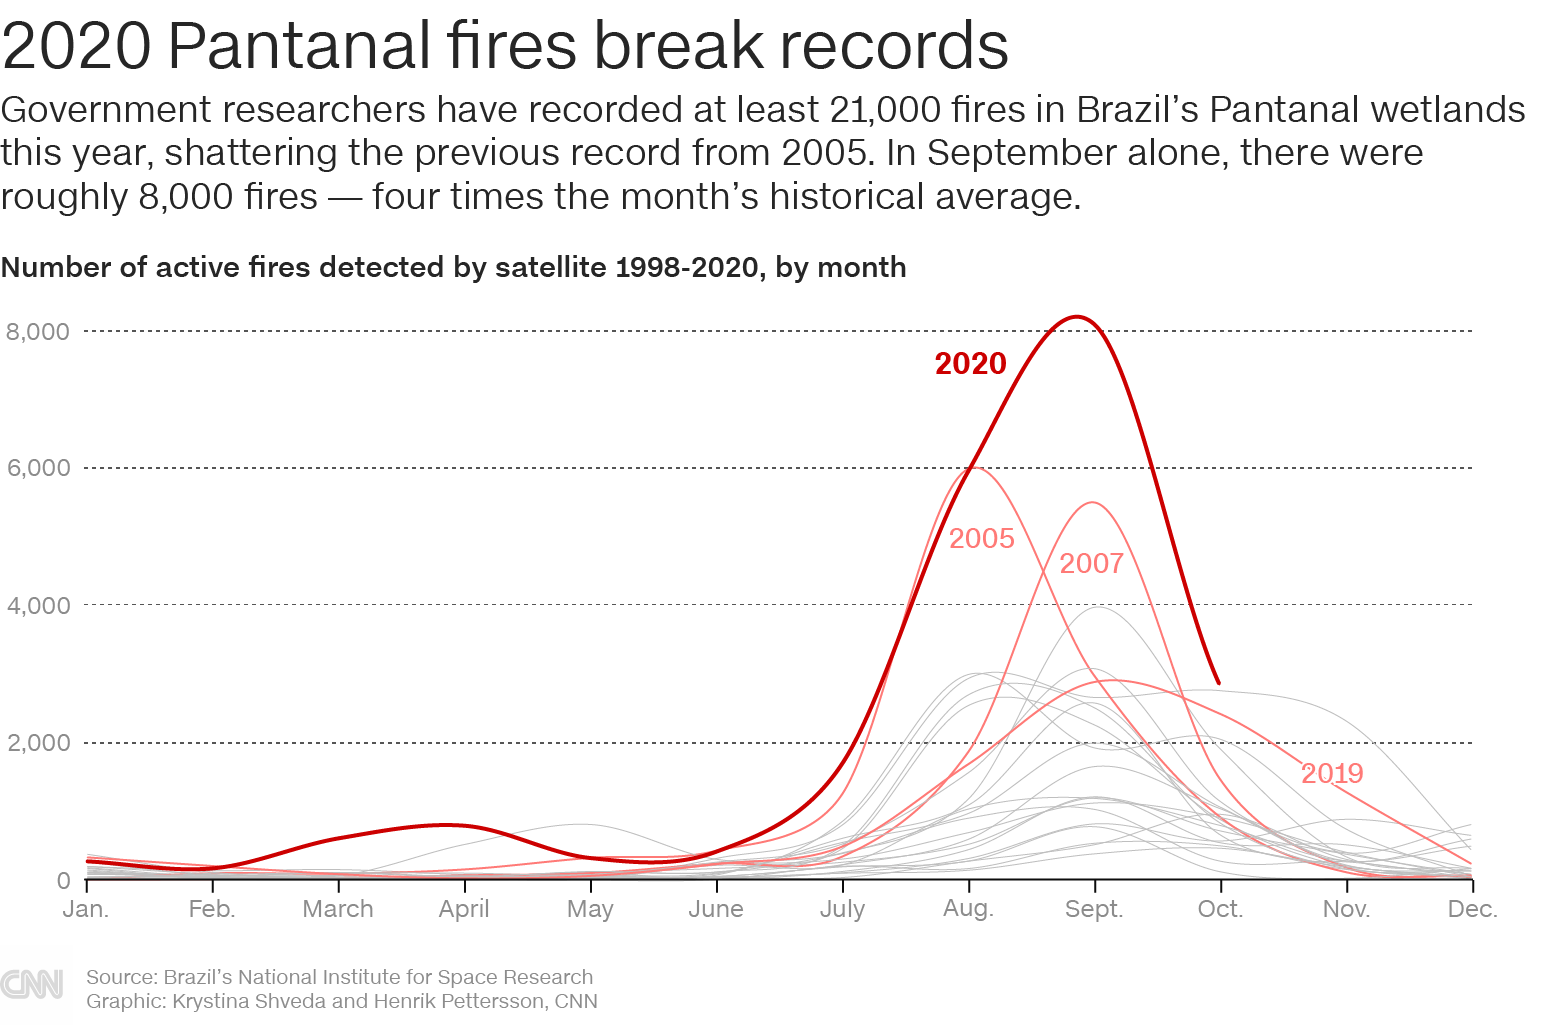 Pantanal fires break records